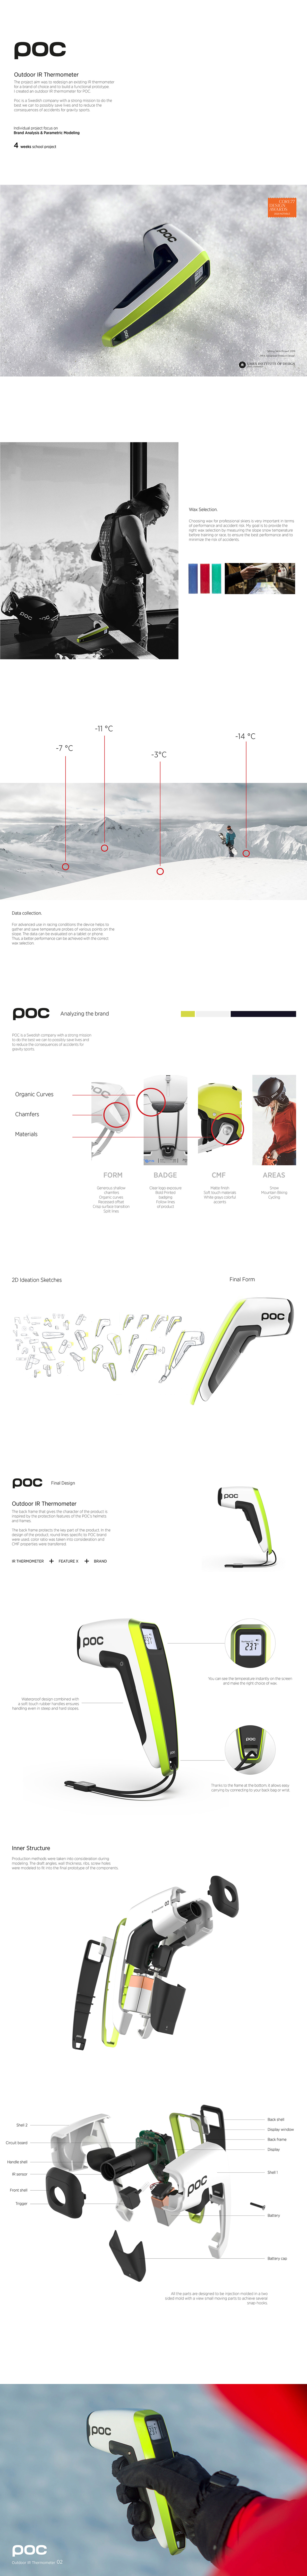 POC productdesign design process industrialdesign thermometer UID umeå prototype Outdoor